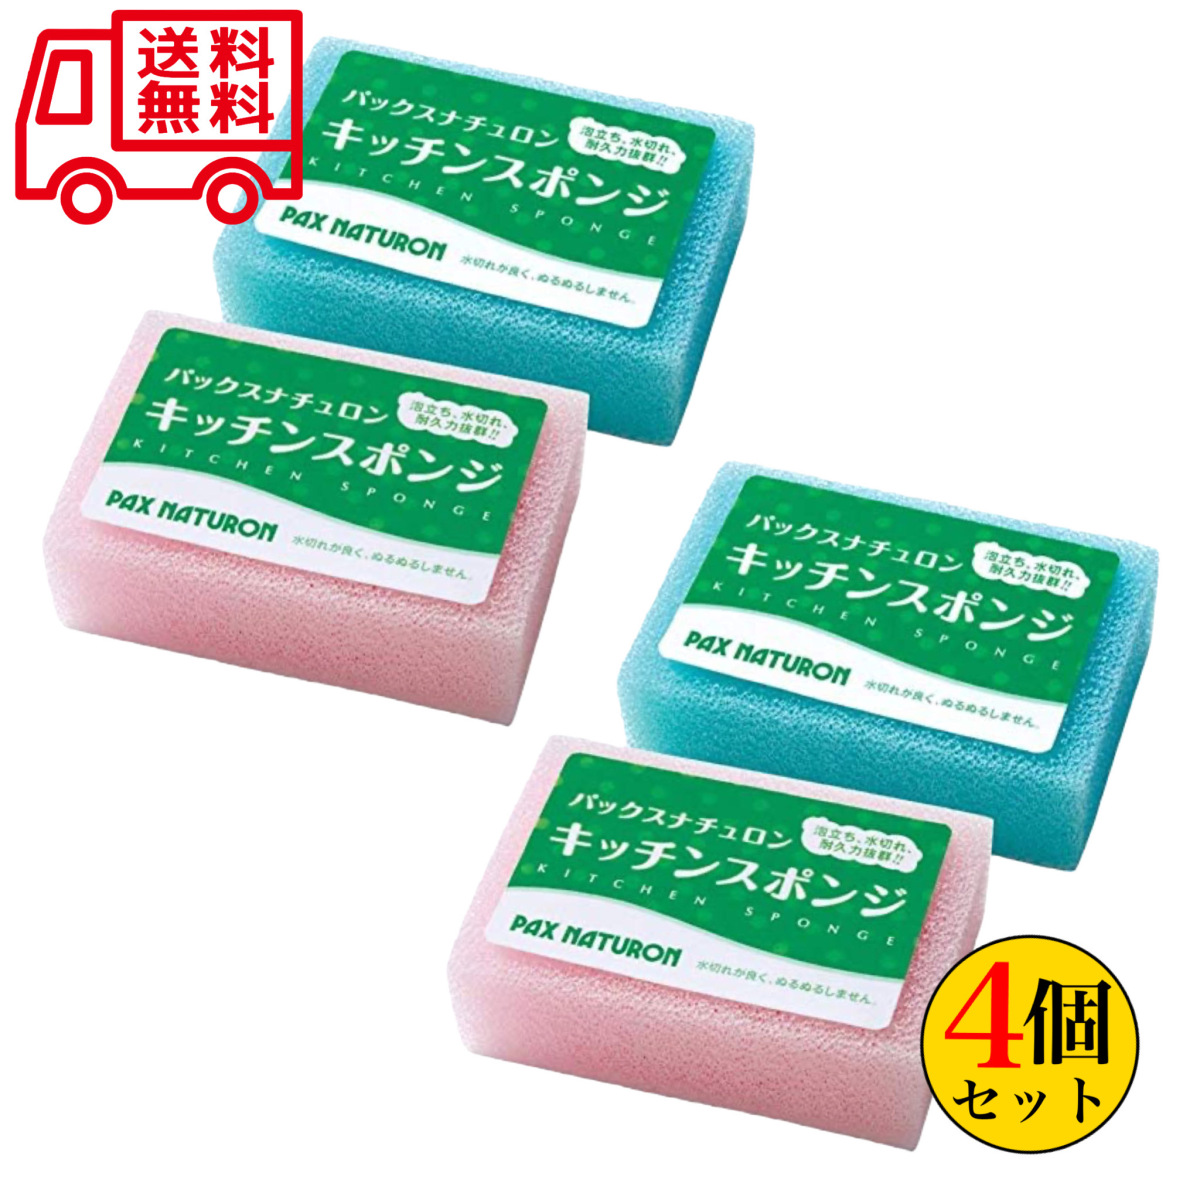  pack snachu long sponge color ×4 piece set sun fats and oils PAX NATURONki chin spo nji bath free shipping 